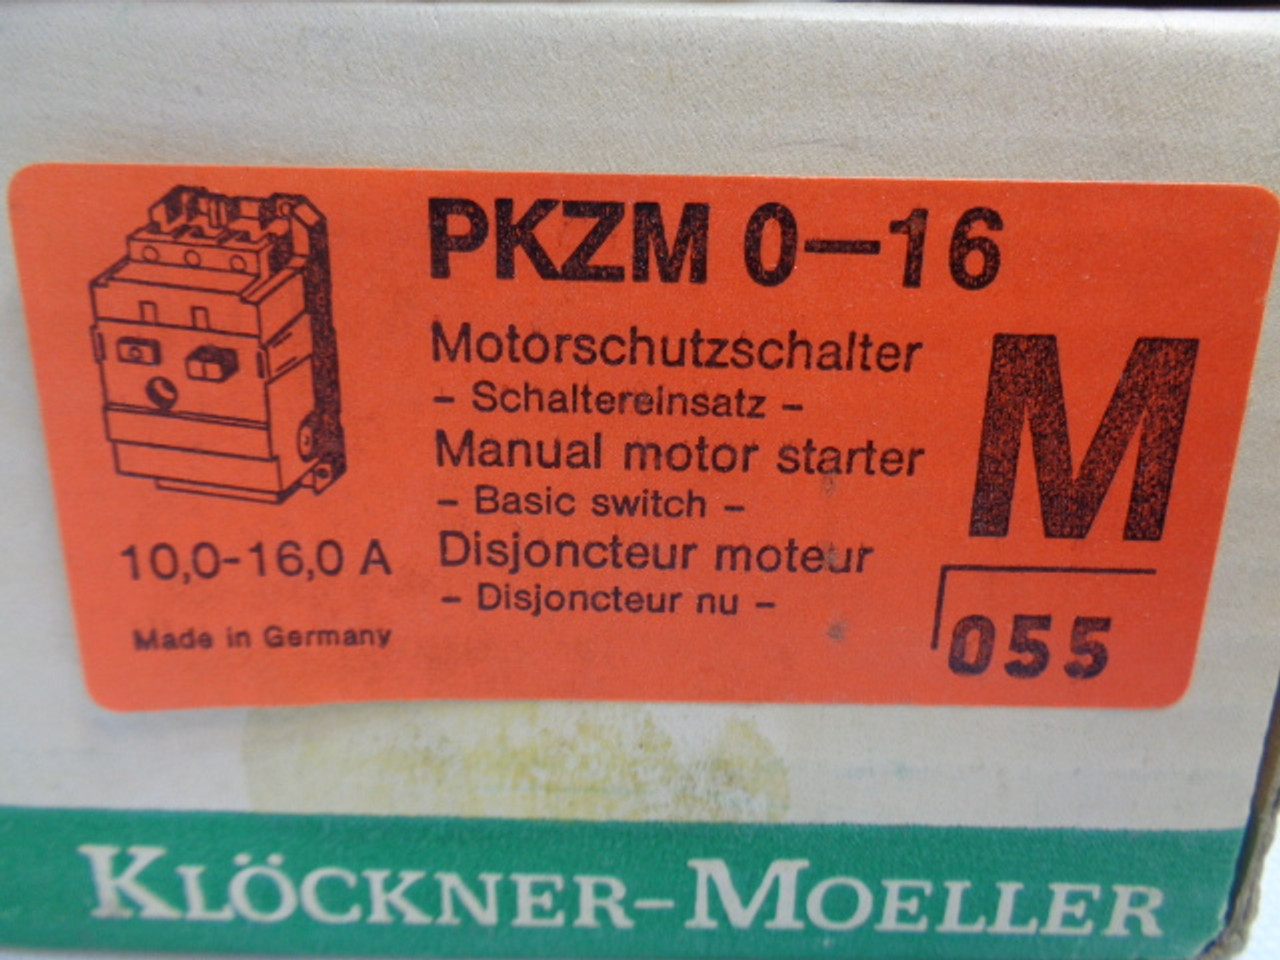 Klockner Moeller PKZM 0-16 Manual Motor Starter (Box of 2) 10,0 - 16,0A